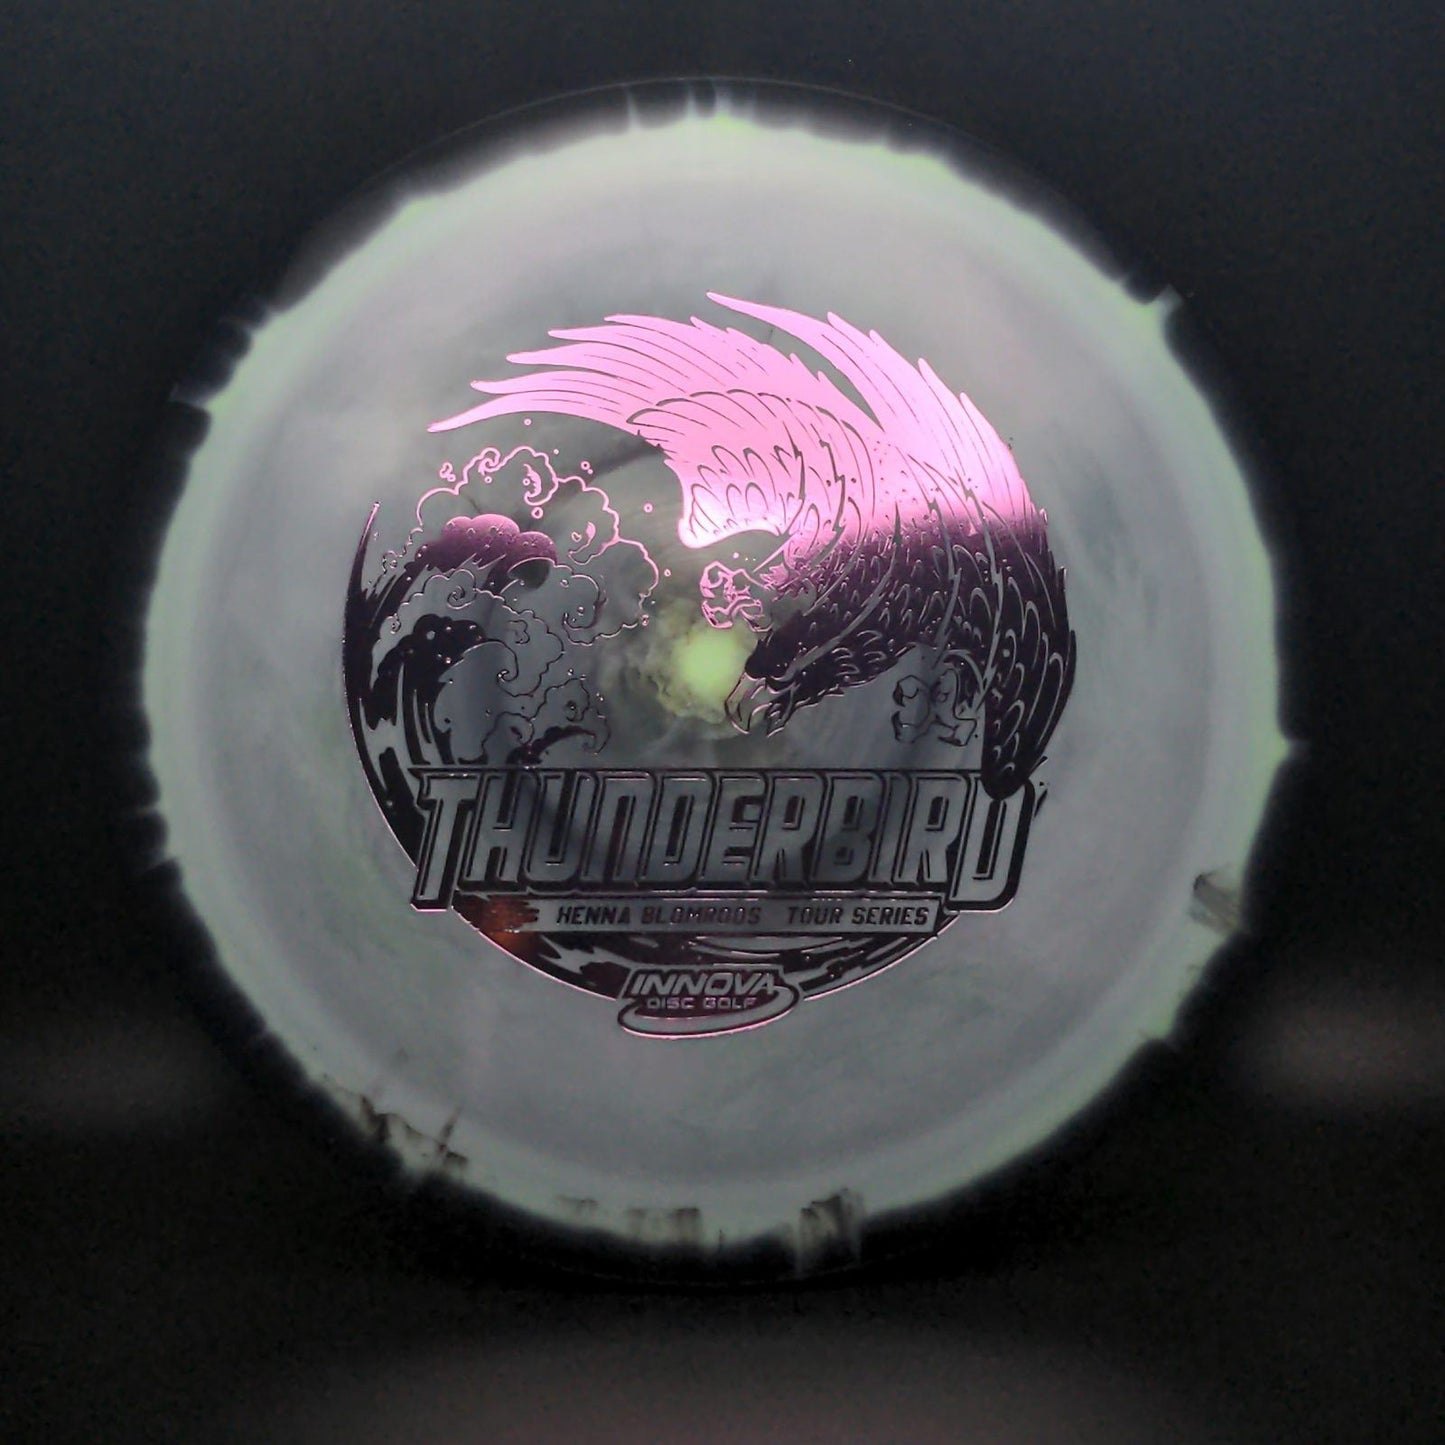 Halo Star Thunderbird - Henna Blomroos Tour Series Innova